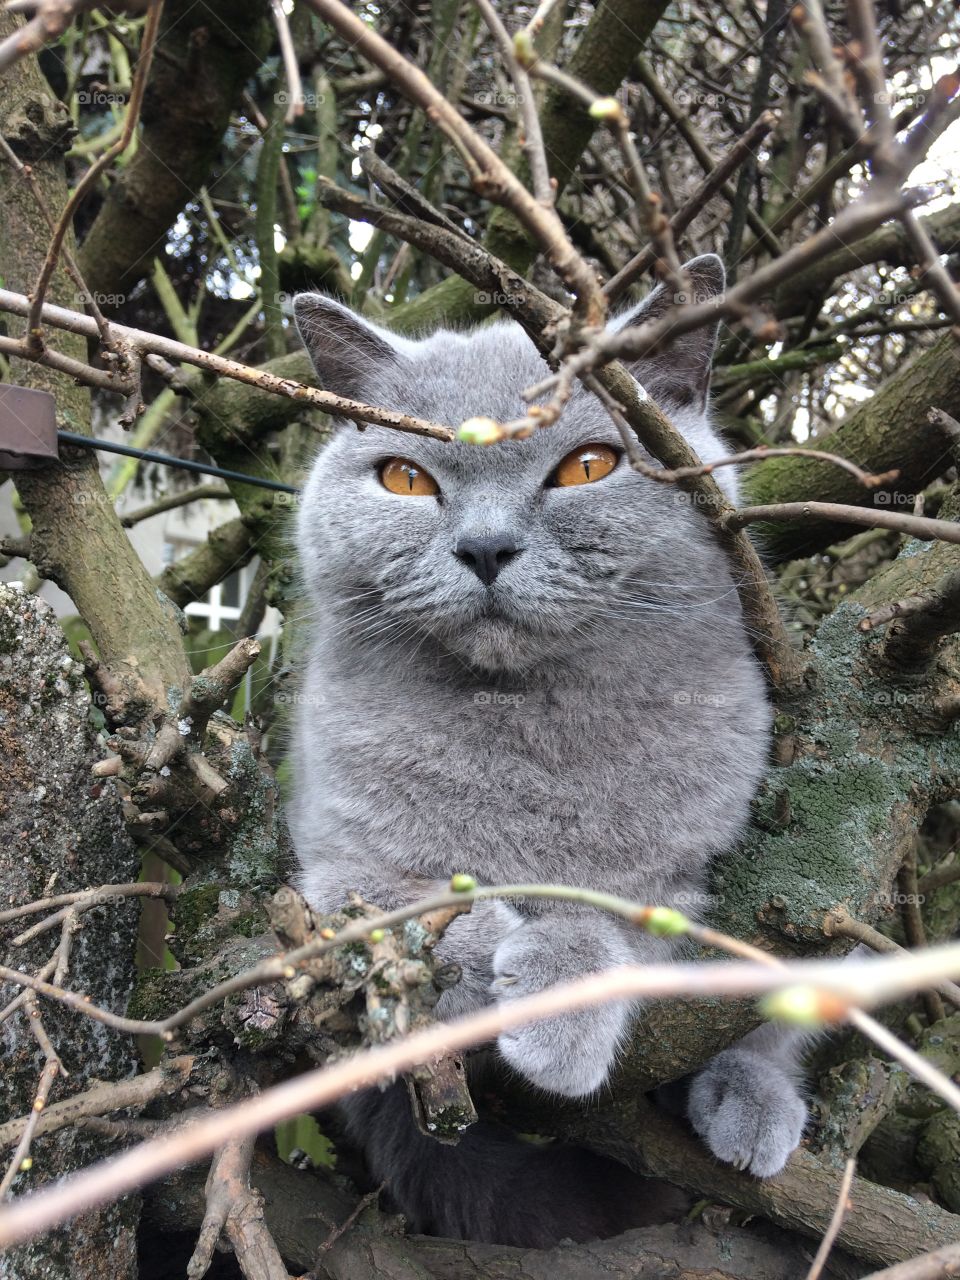 Tree cat